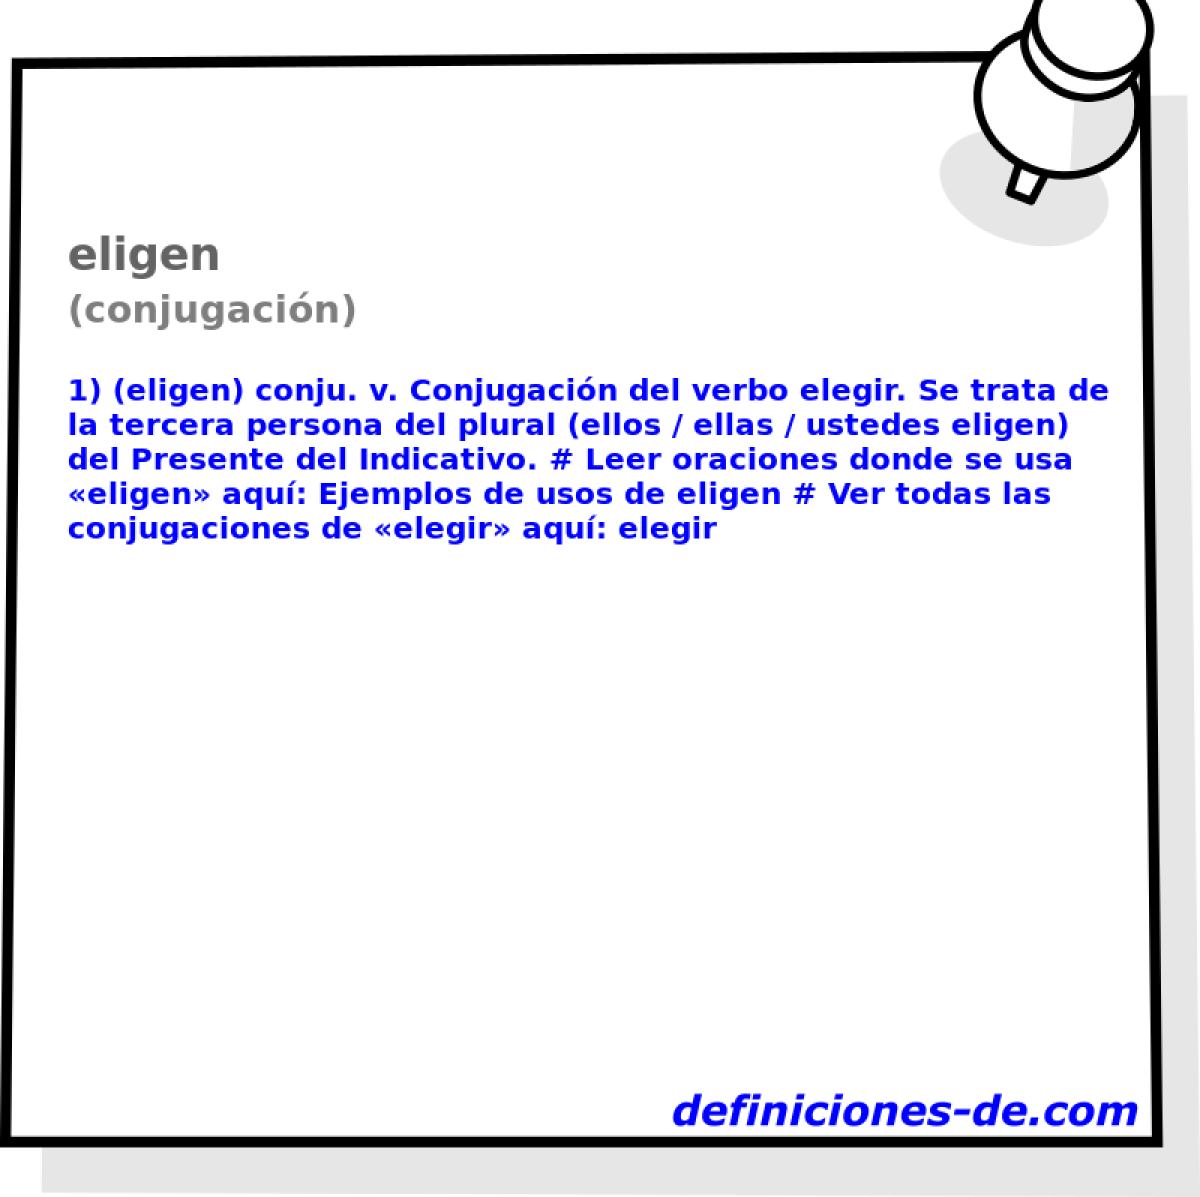 eligen (conjugacin)